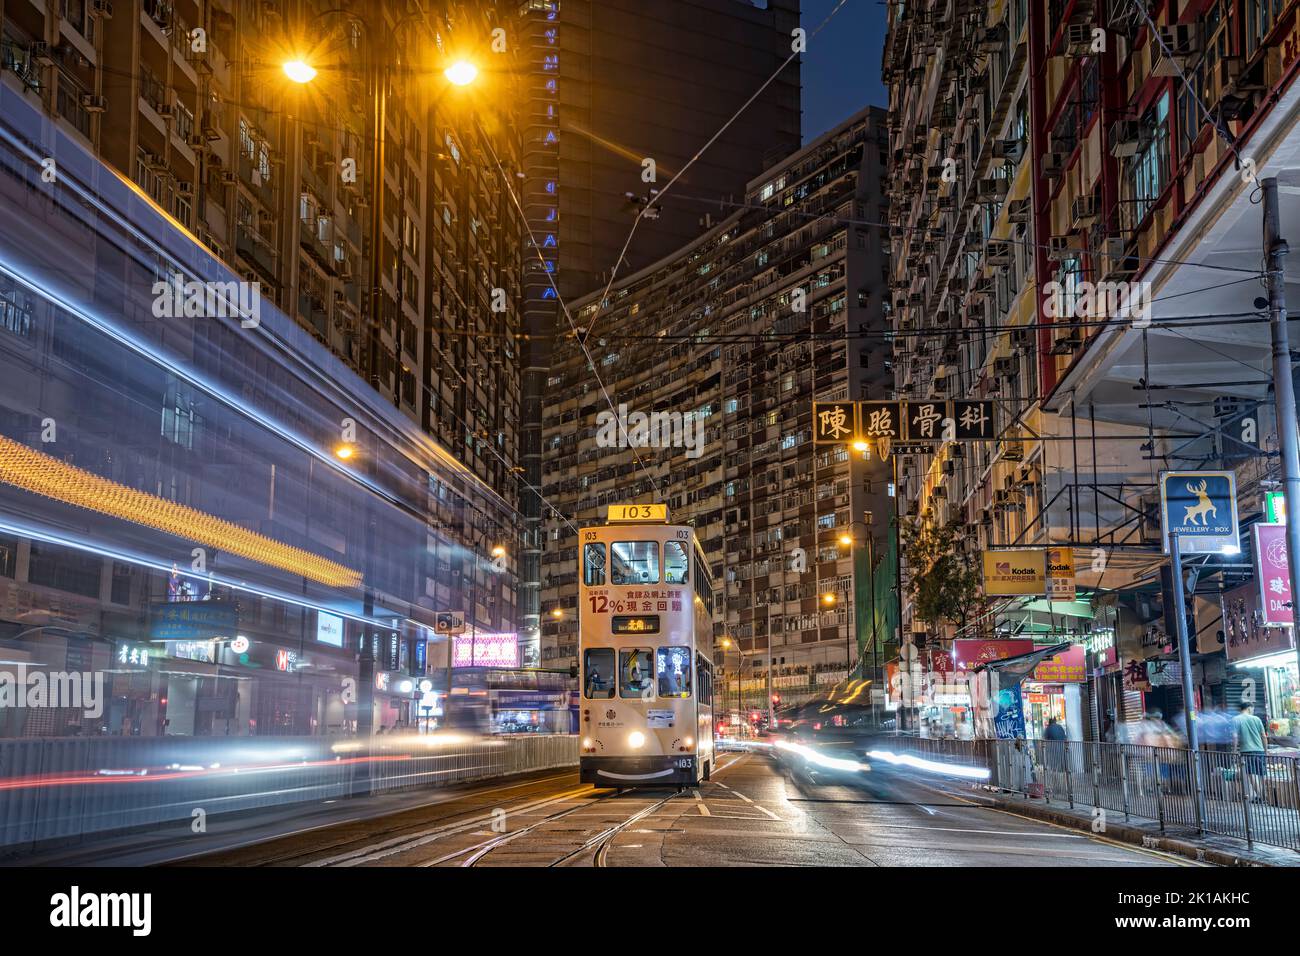 Die berühmten Hongkonger Straßenbahnen und dicht besiedelten Wohngebäude, Hongkong, China. Stockfoto